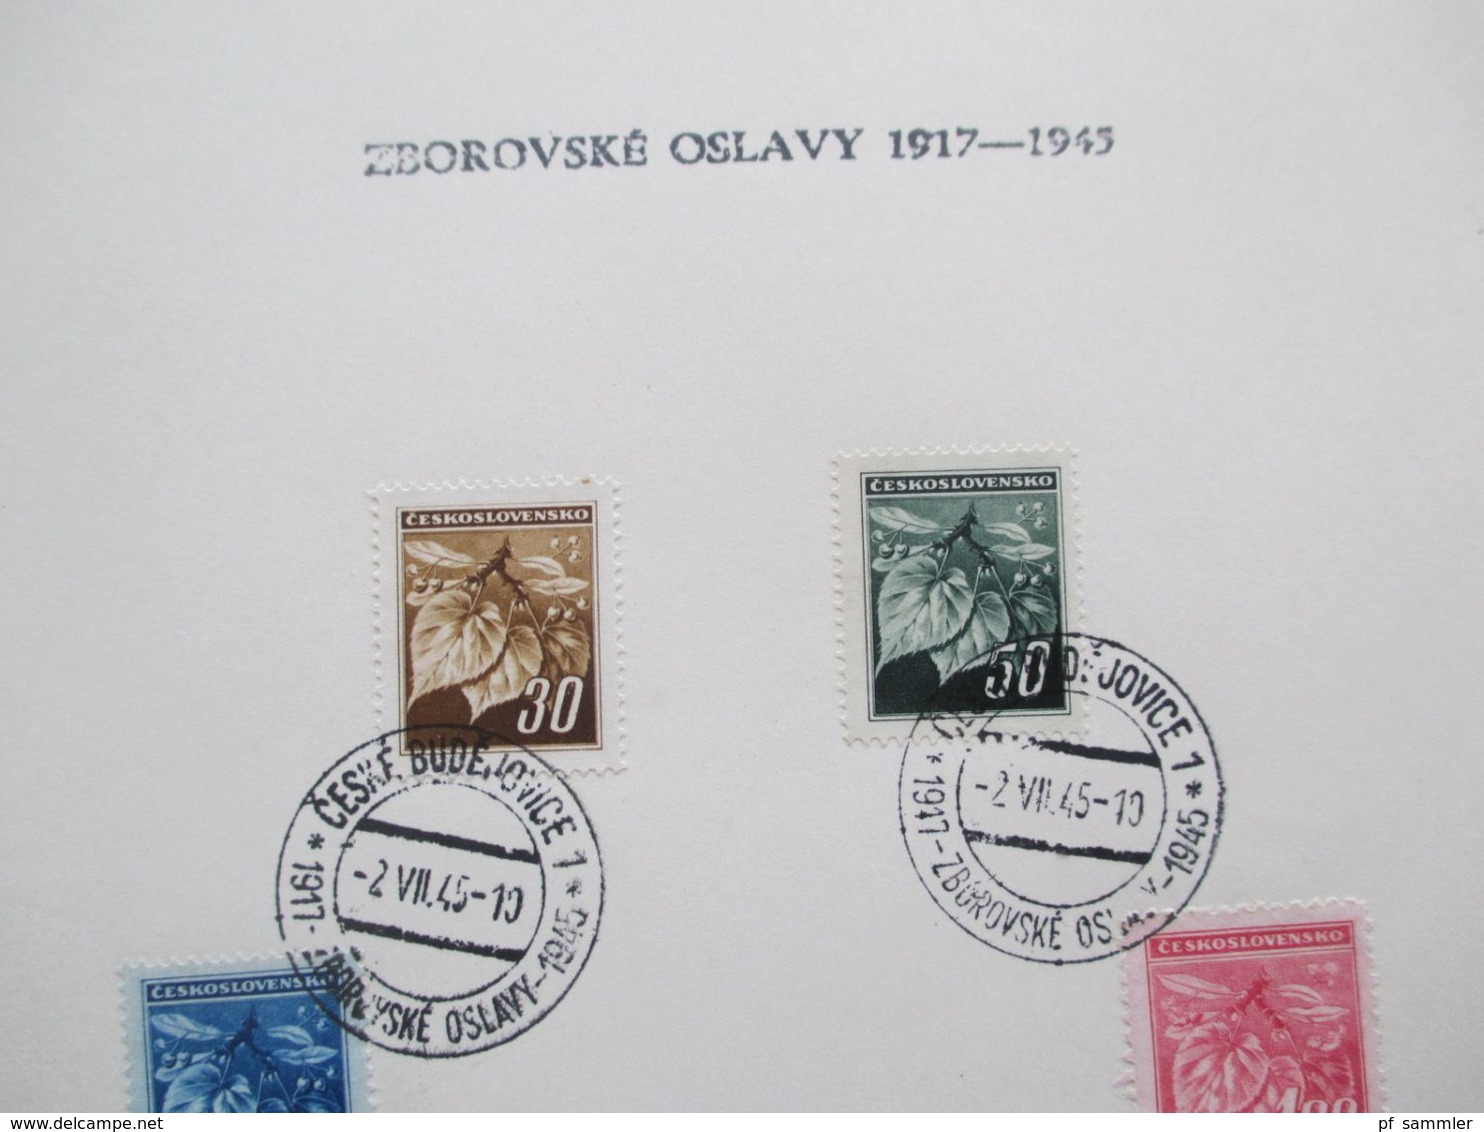 CSSR 2.7.1945 Sonderblätter Zborovske Oslavy 1917 - 1945 Stempel Ceske Budejovice 5 Blätter - Lettres & Documents